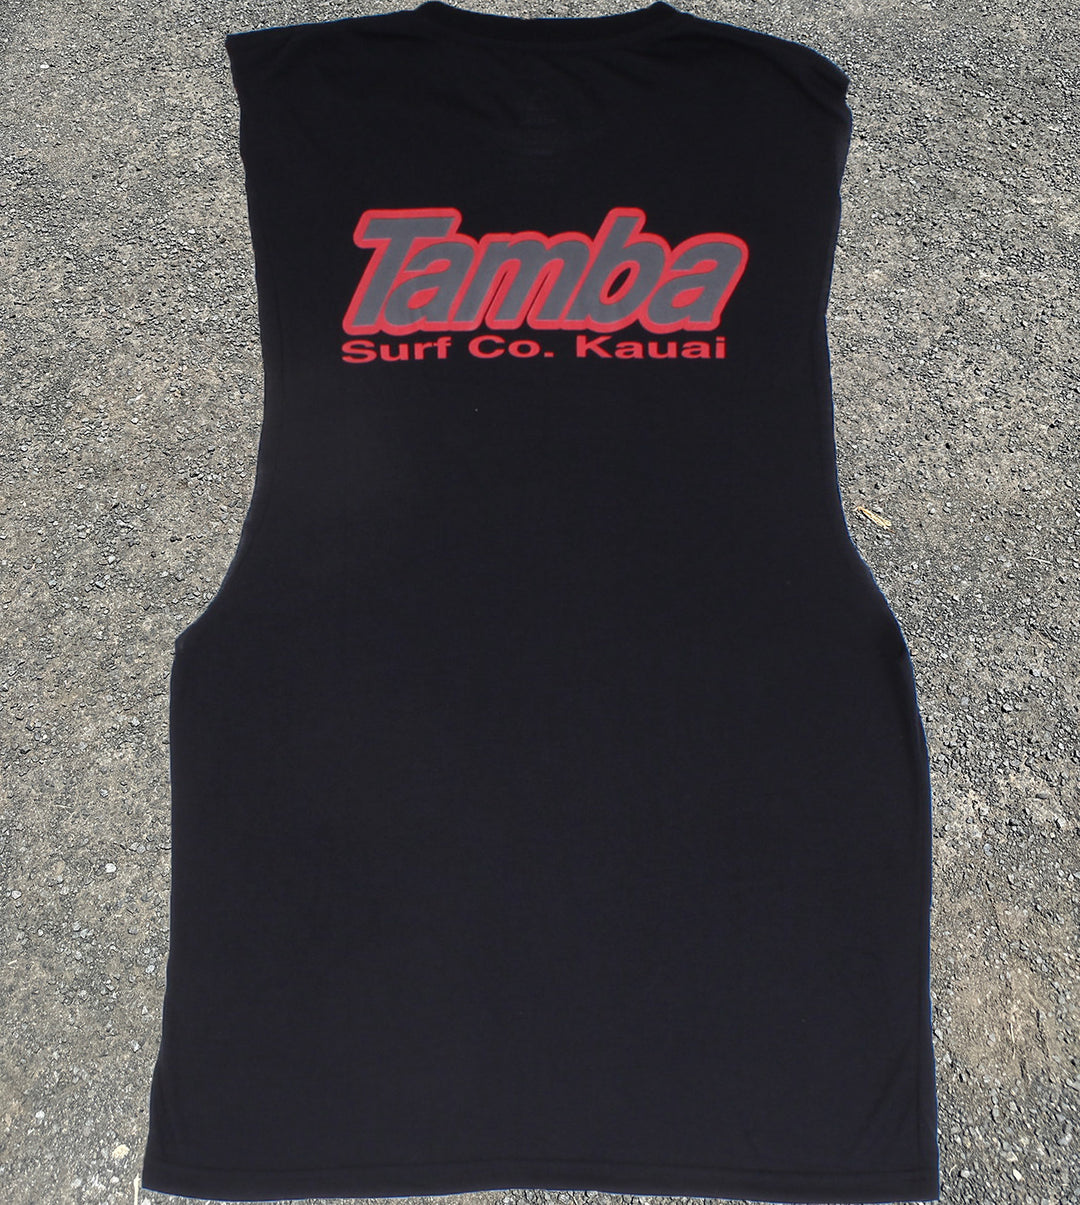 Surf Co Kauai Muscle Tank Top Shirt - Black/Red/Grey